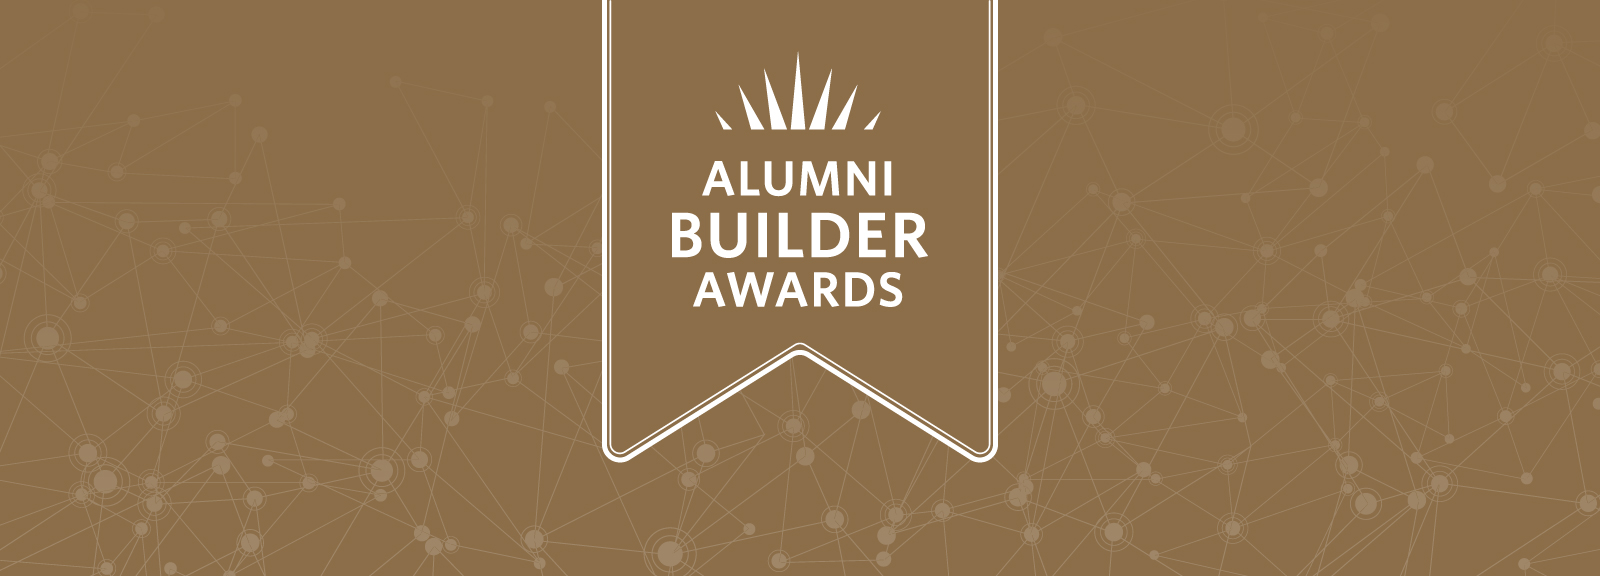 Alumni Builder Awards Banner